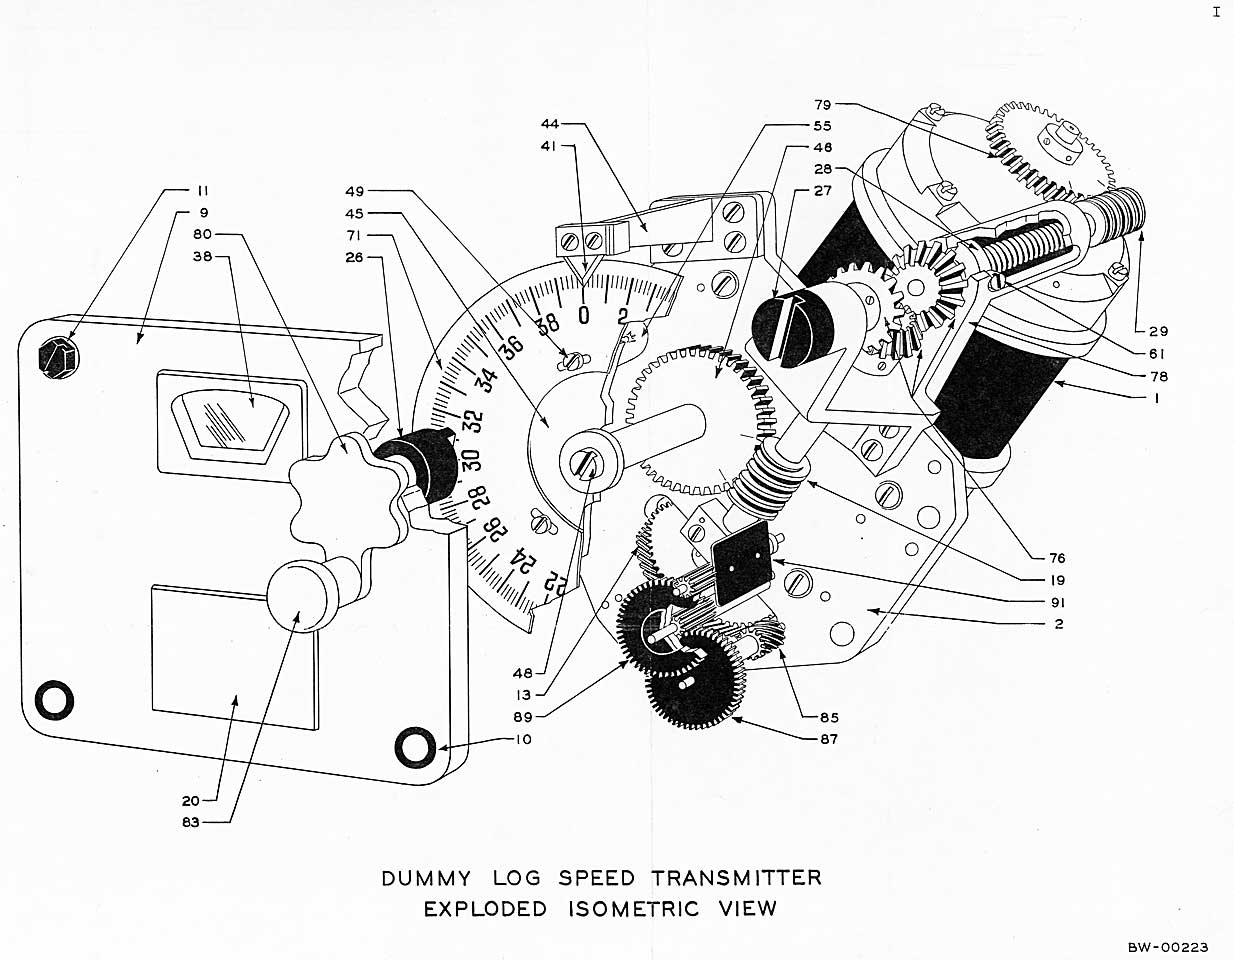 BW-00223-Dummy Log Speed Transmitter-Exploded Isometric View